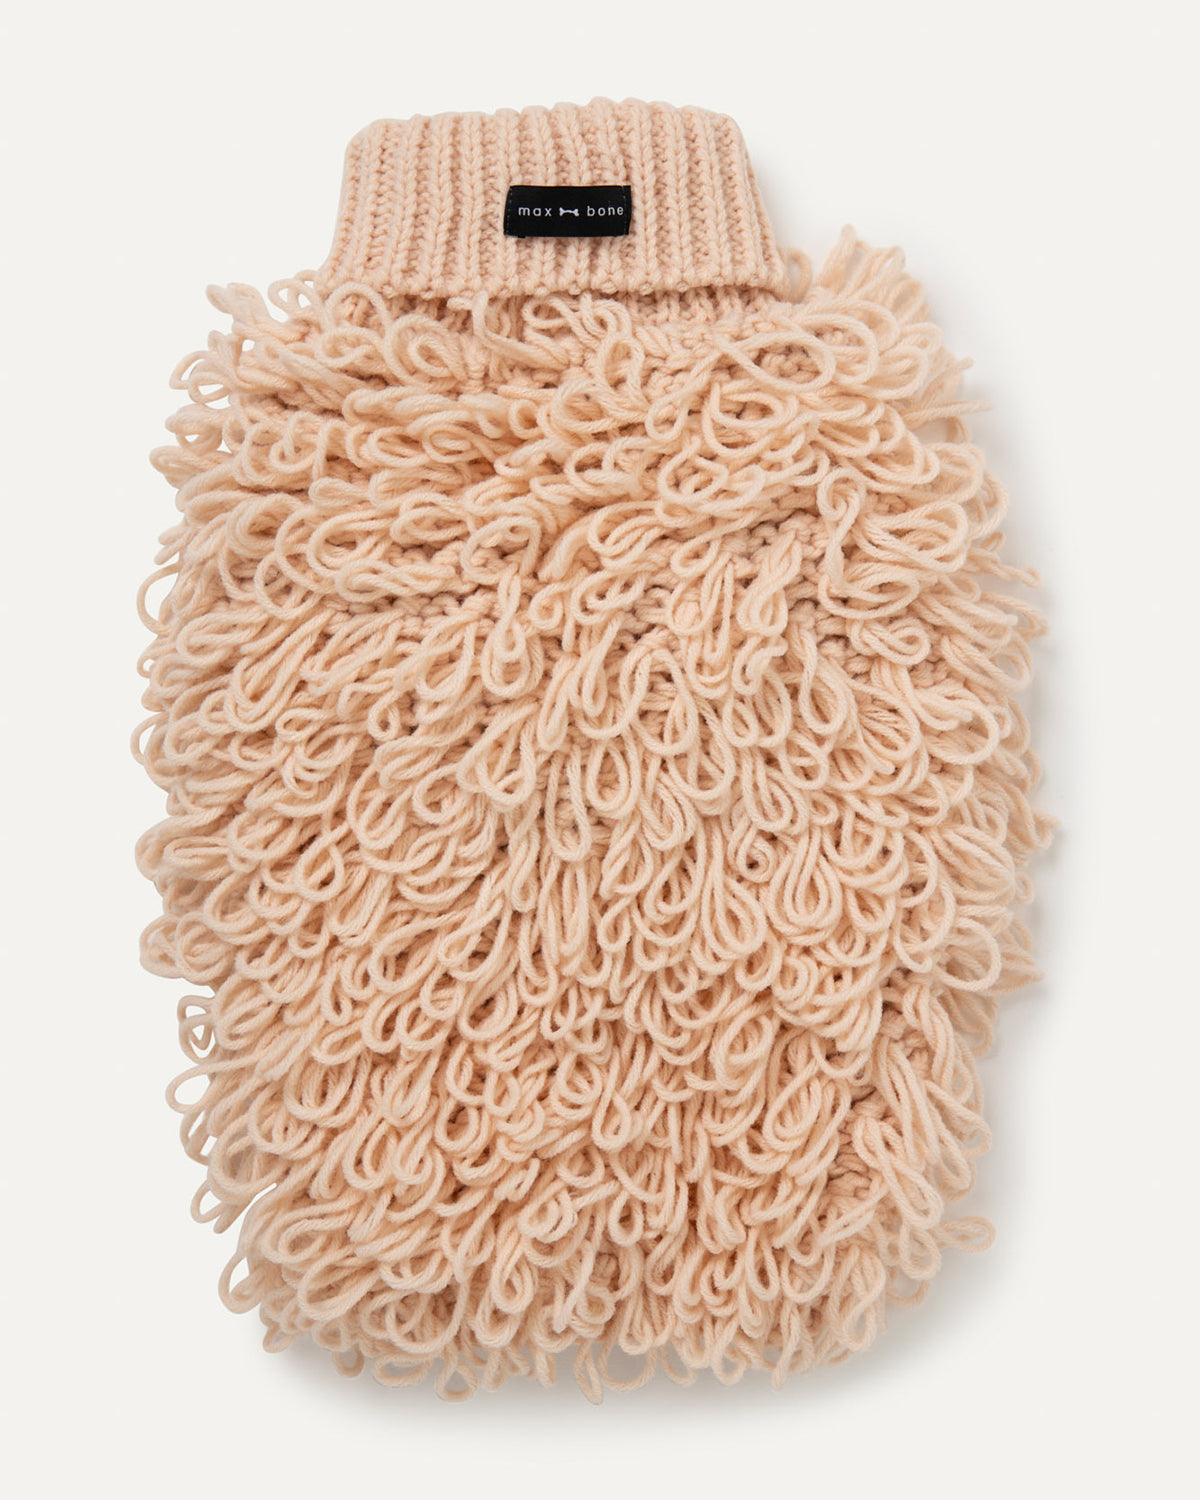 Maxbone Curly Knit Sweater - Peach